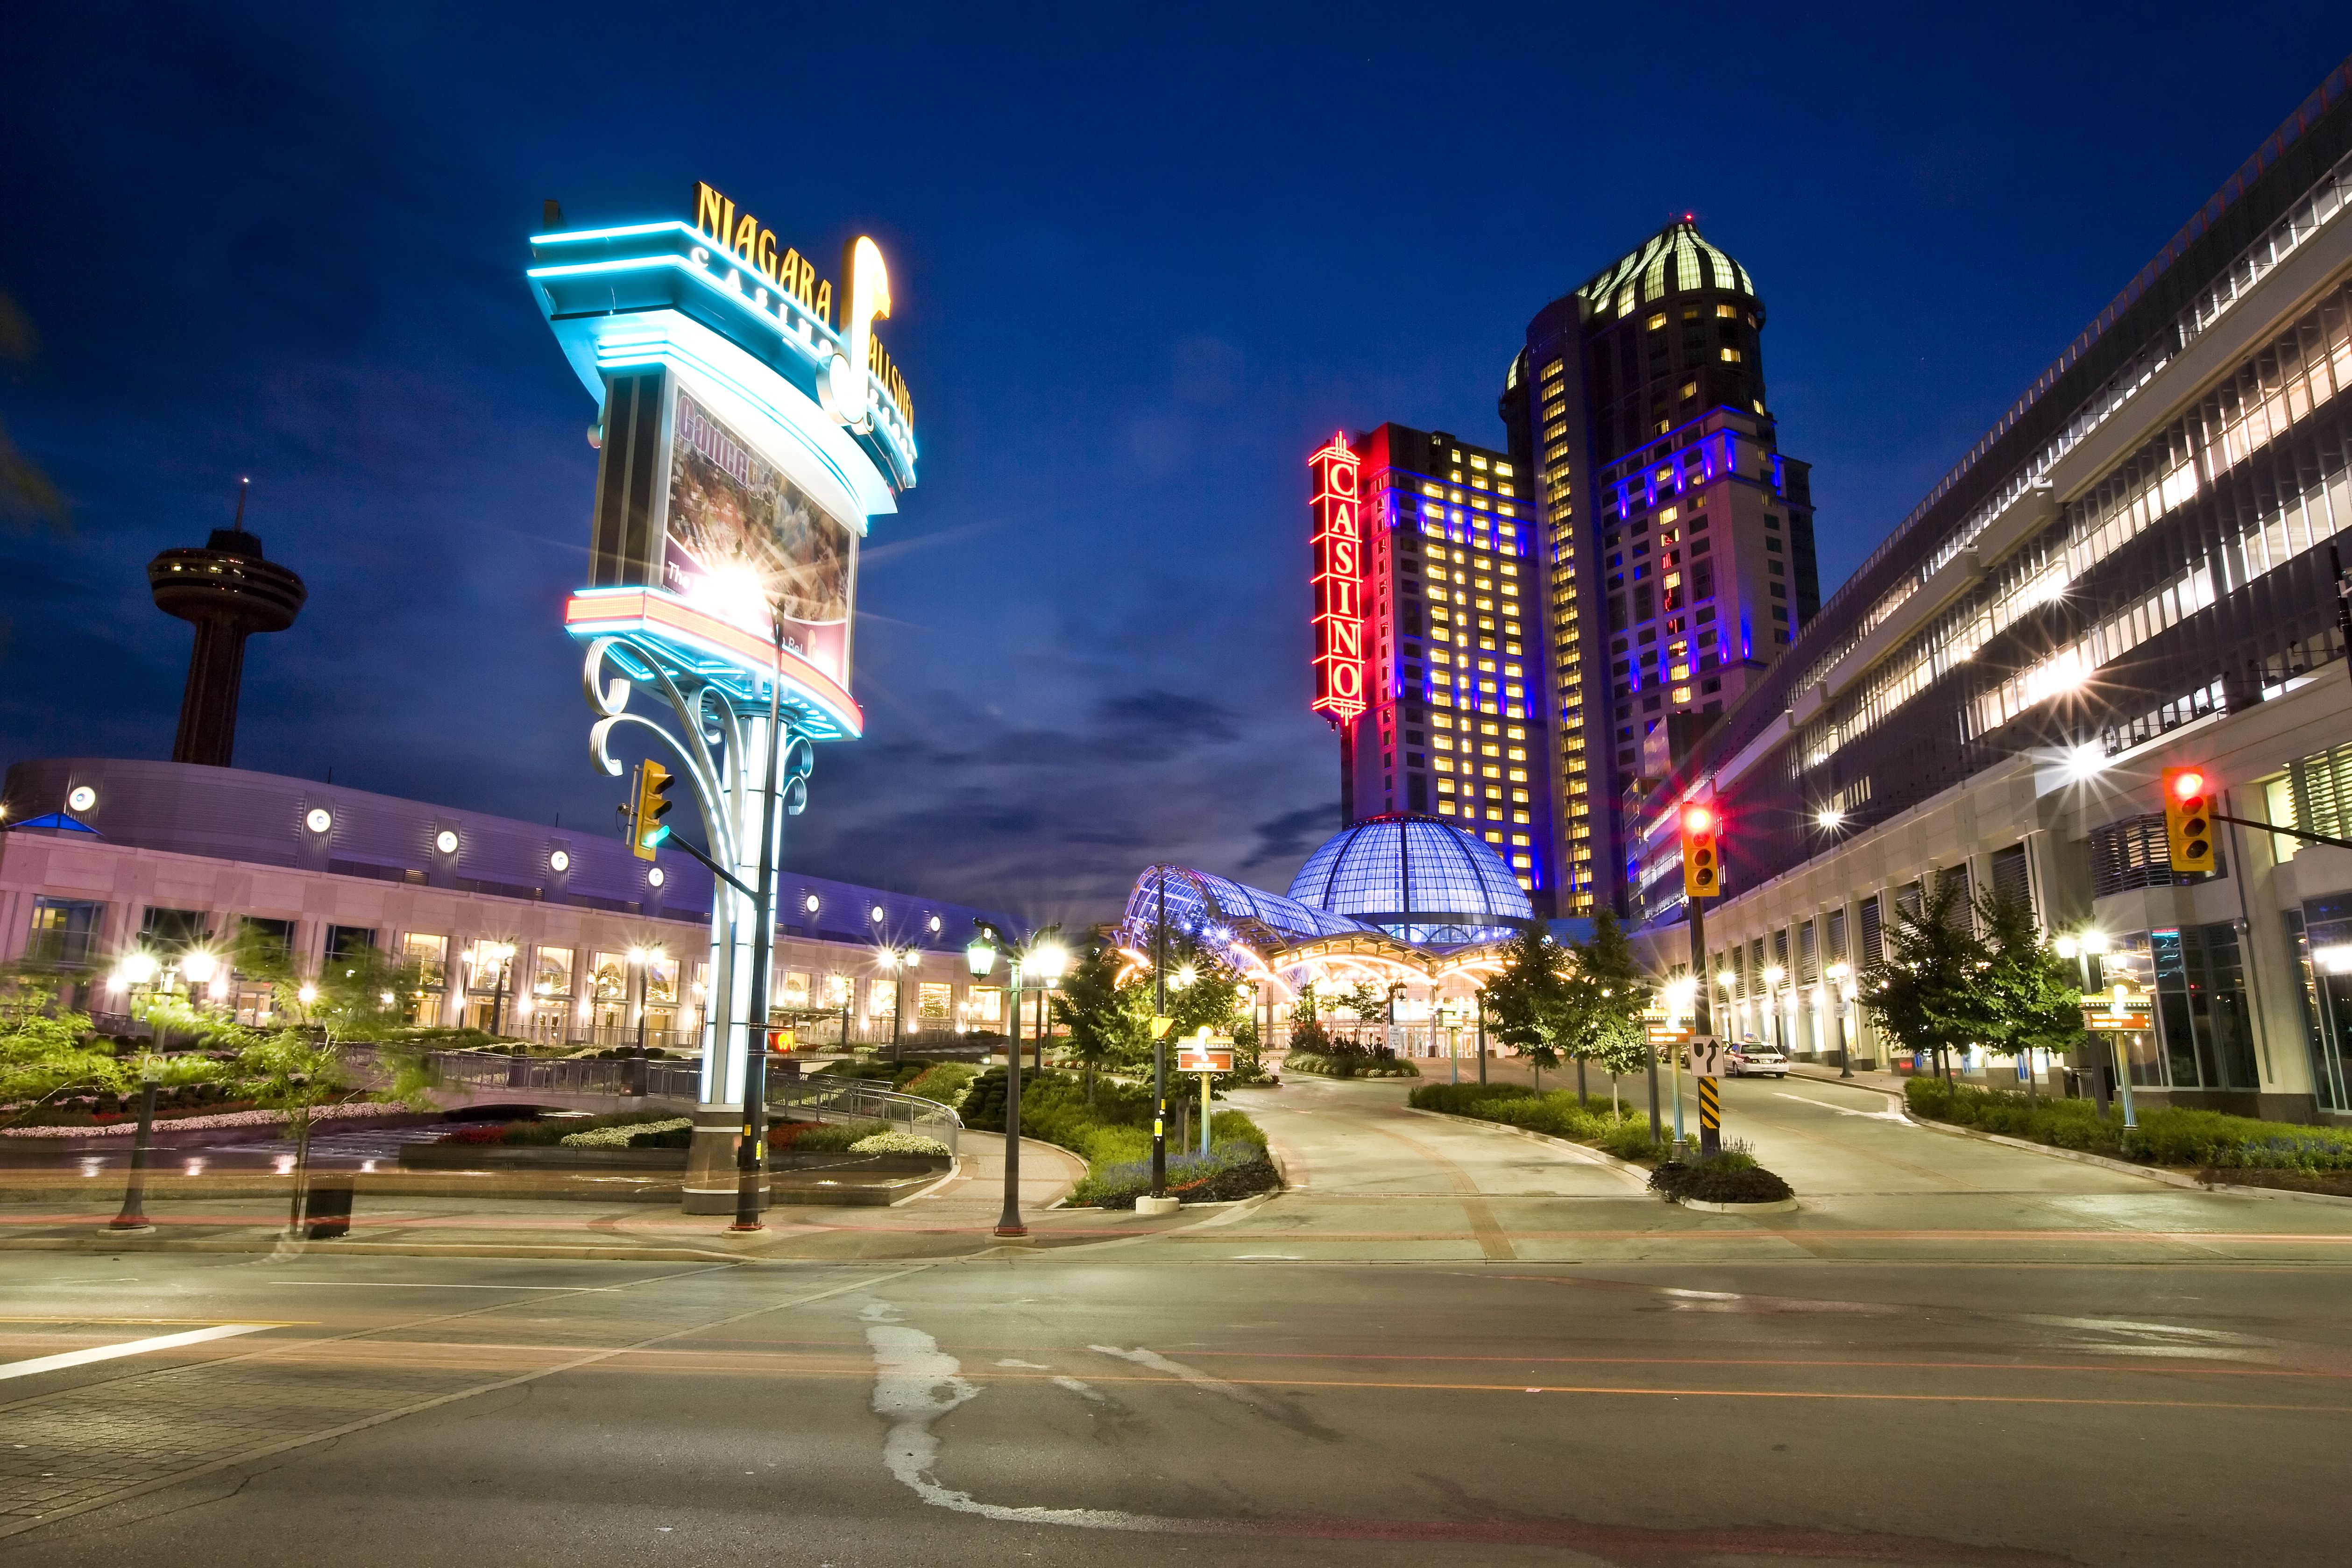 List Of Casinos In Ontario